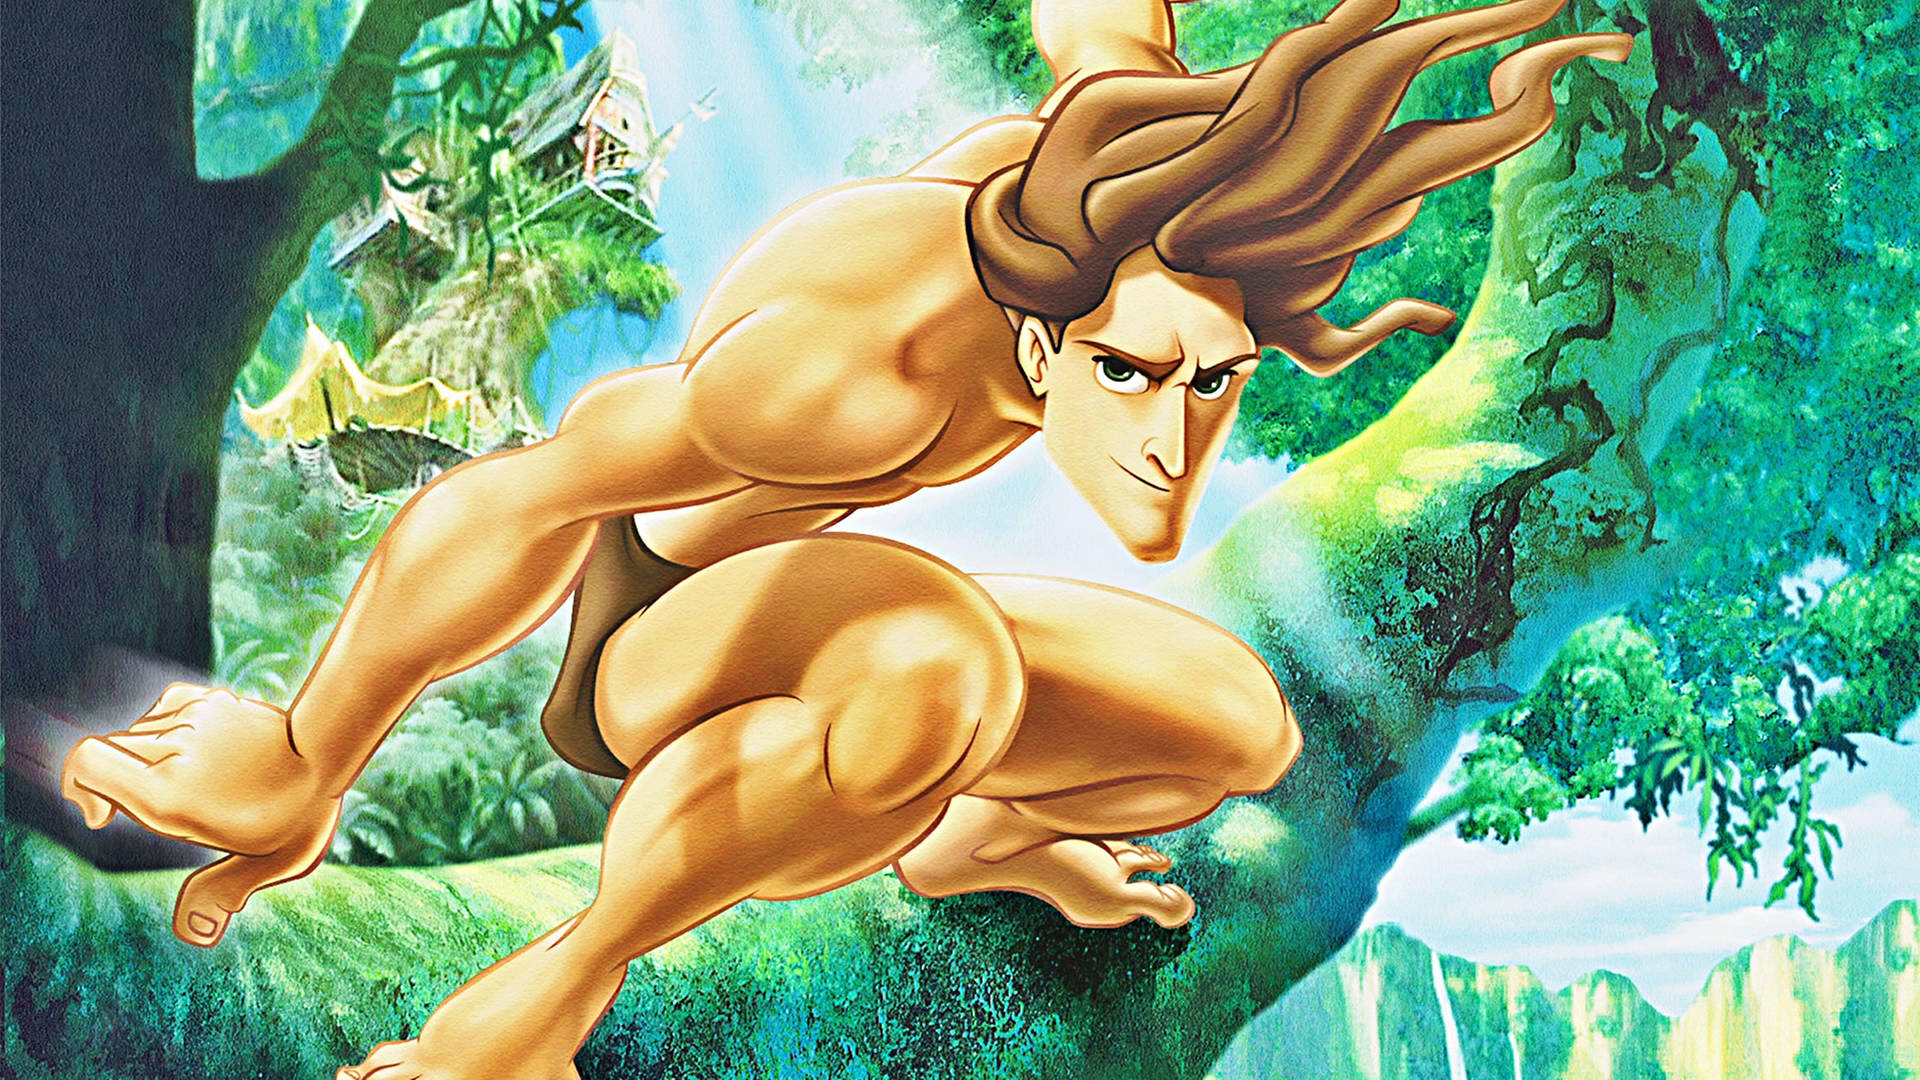 Tarzan Pictures Wallpaper